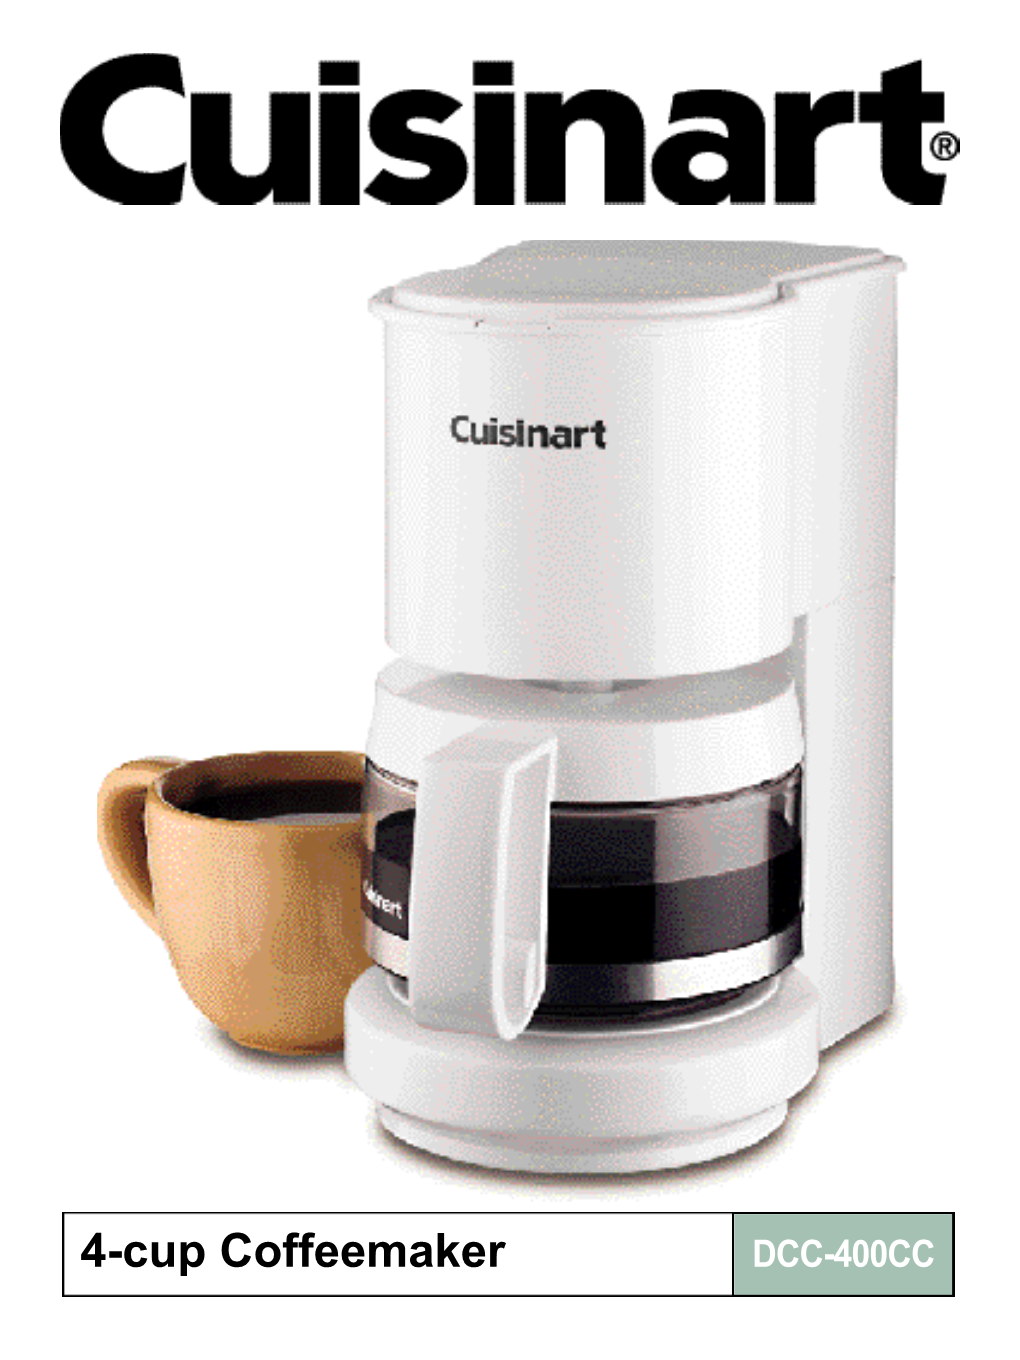 4-Cup Coffeemaker DC C - 4 0 0 C C CONTINENTAL CONAIR LIMITED Customer: CCCPI-UISINART Model No